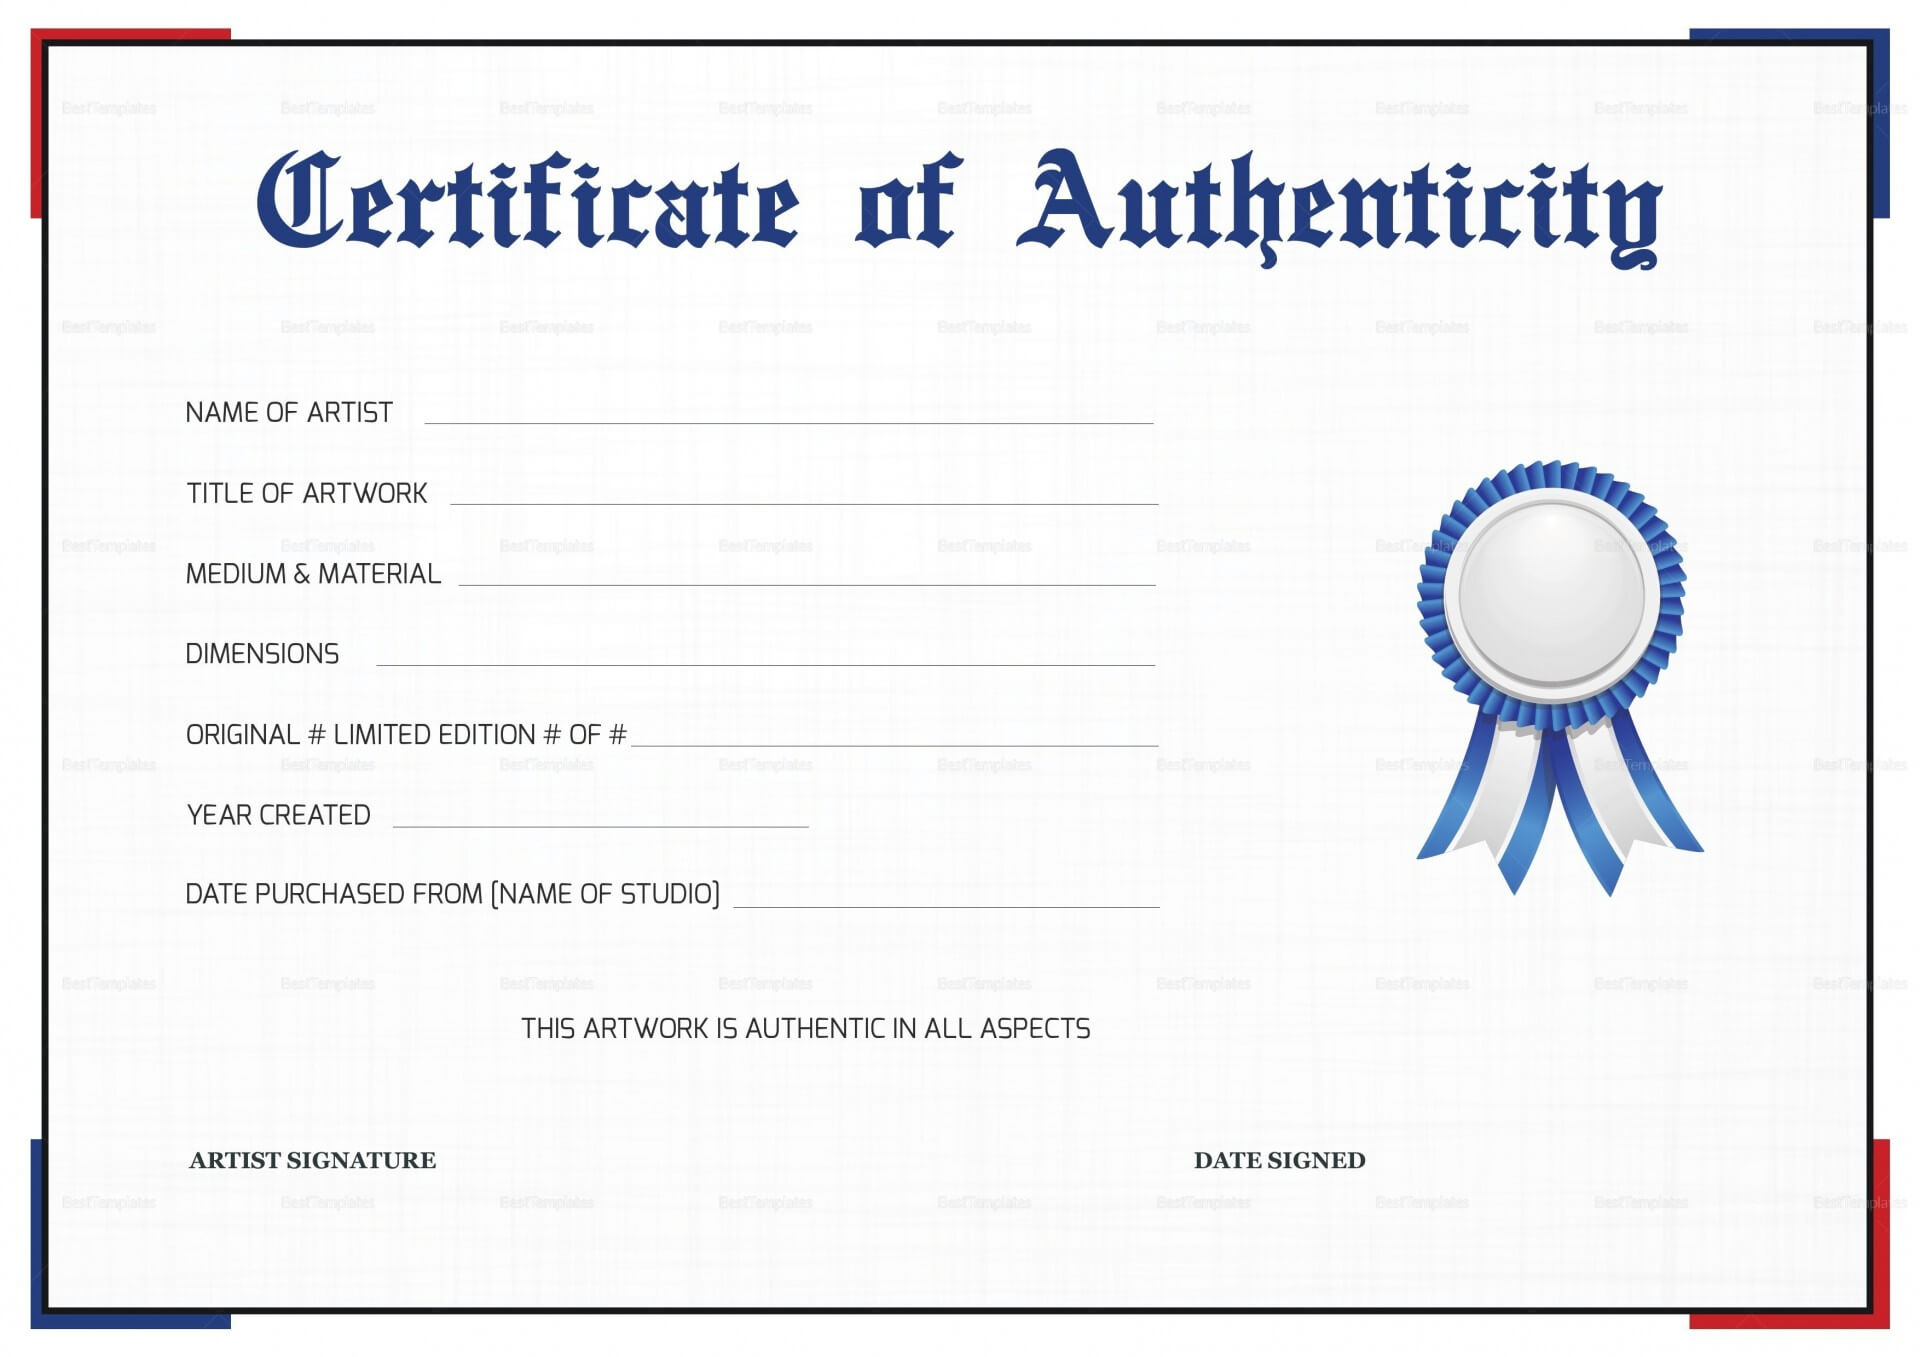 011 Certificate Of Authenticity Artwork Template Resume Art Regarding Photography Certificate Of Authenticity Template